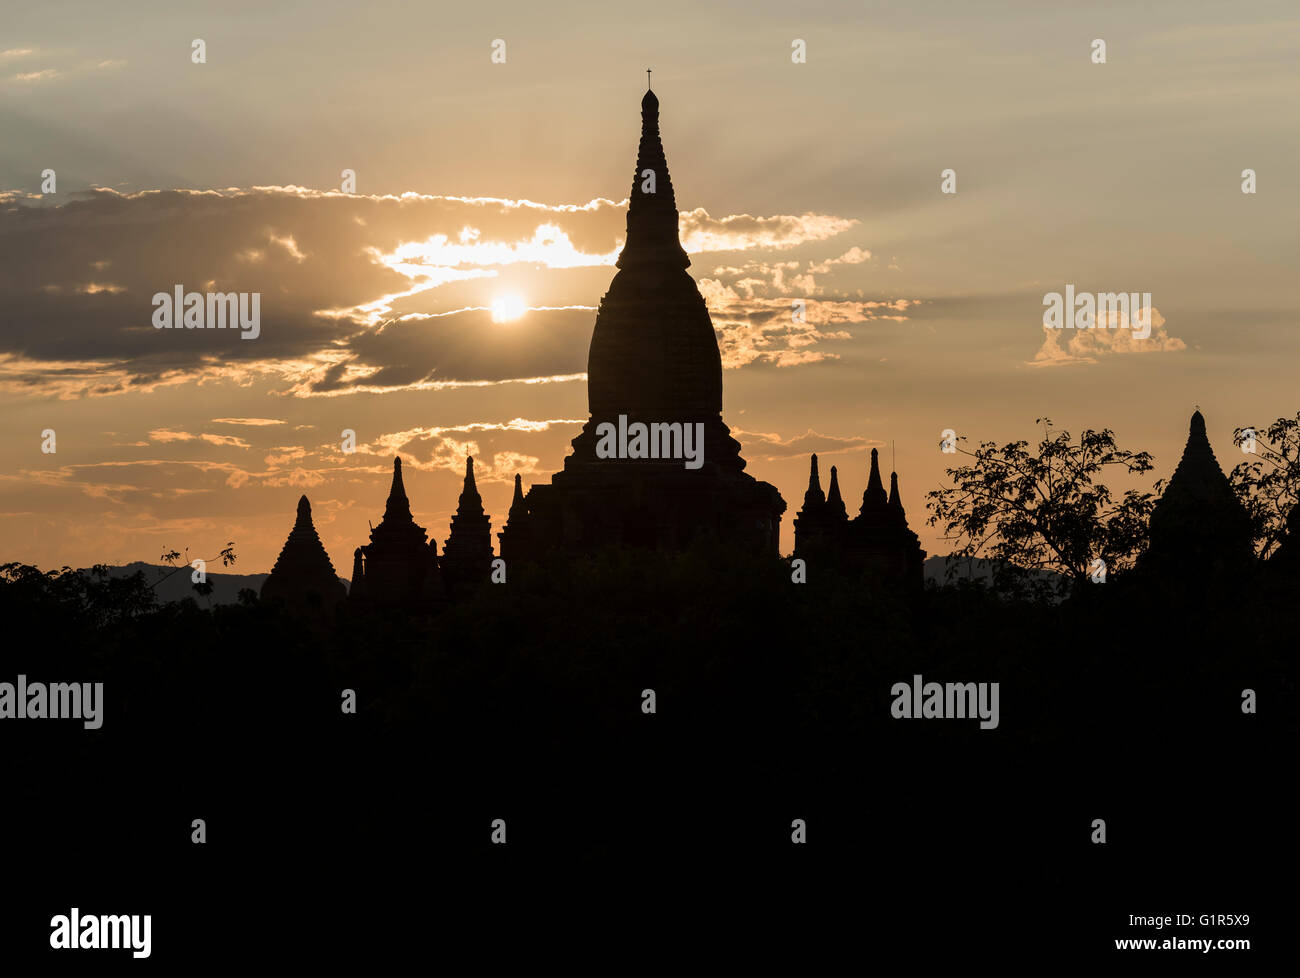 Sunset over temples of Bagan, Burma - Myanmar Stock Photo